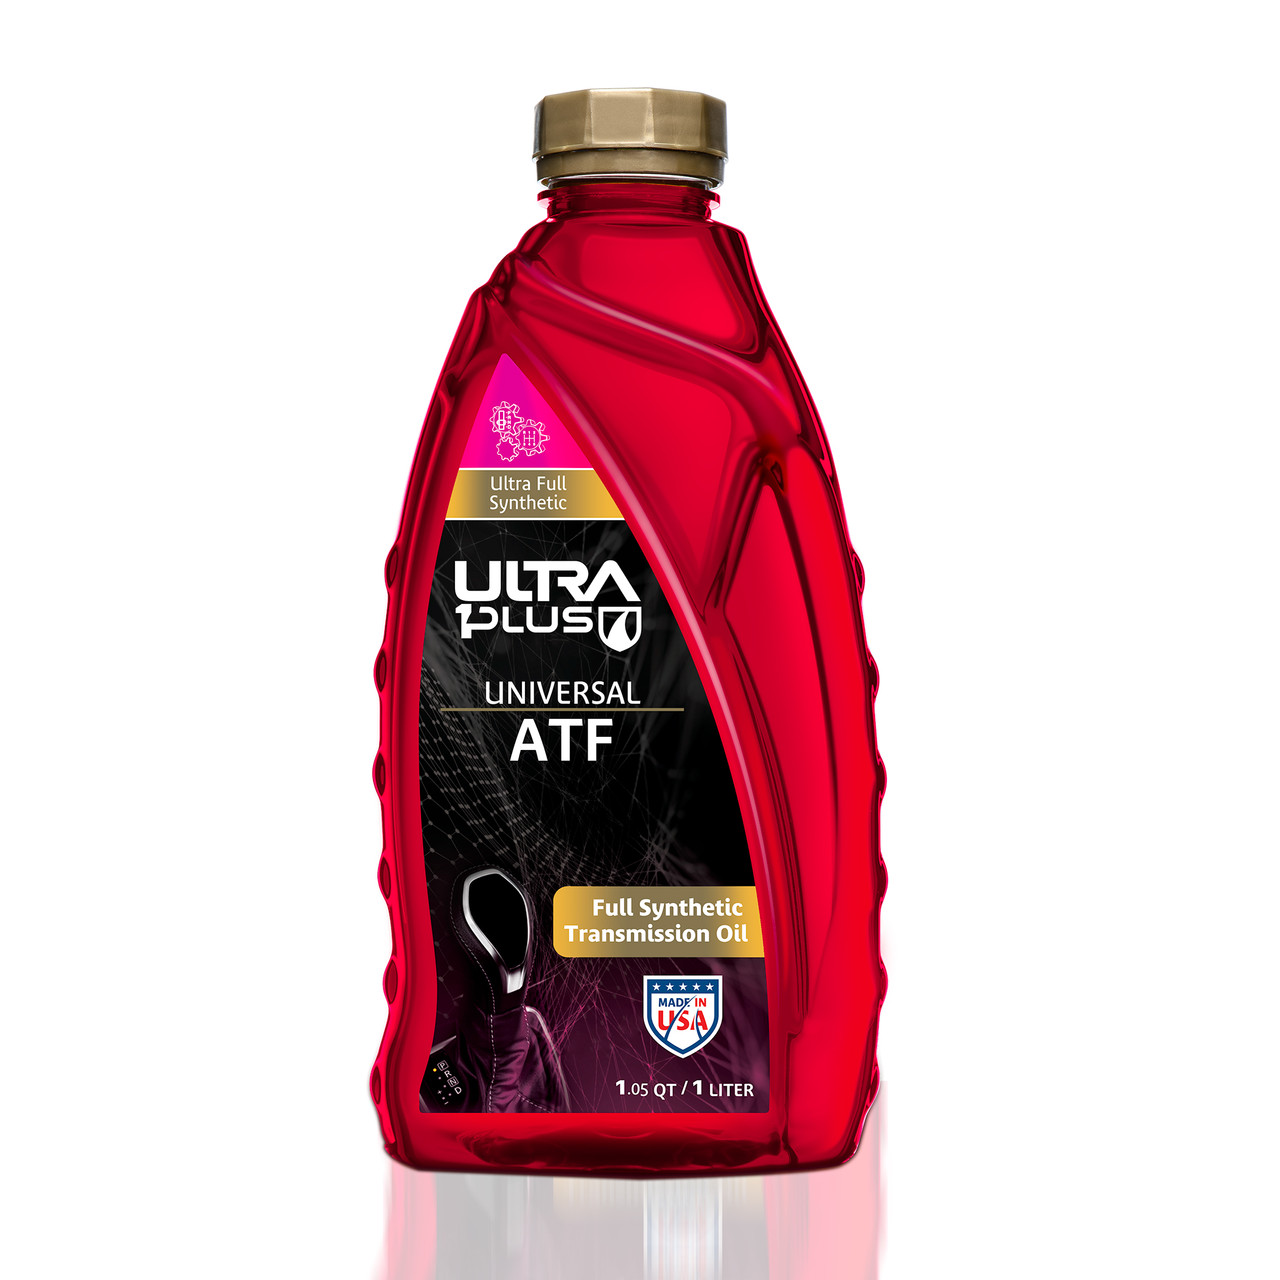 Atf red 1. Ultra Plus Universal ATF. ATF.